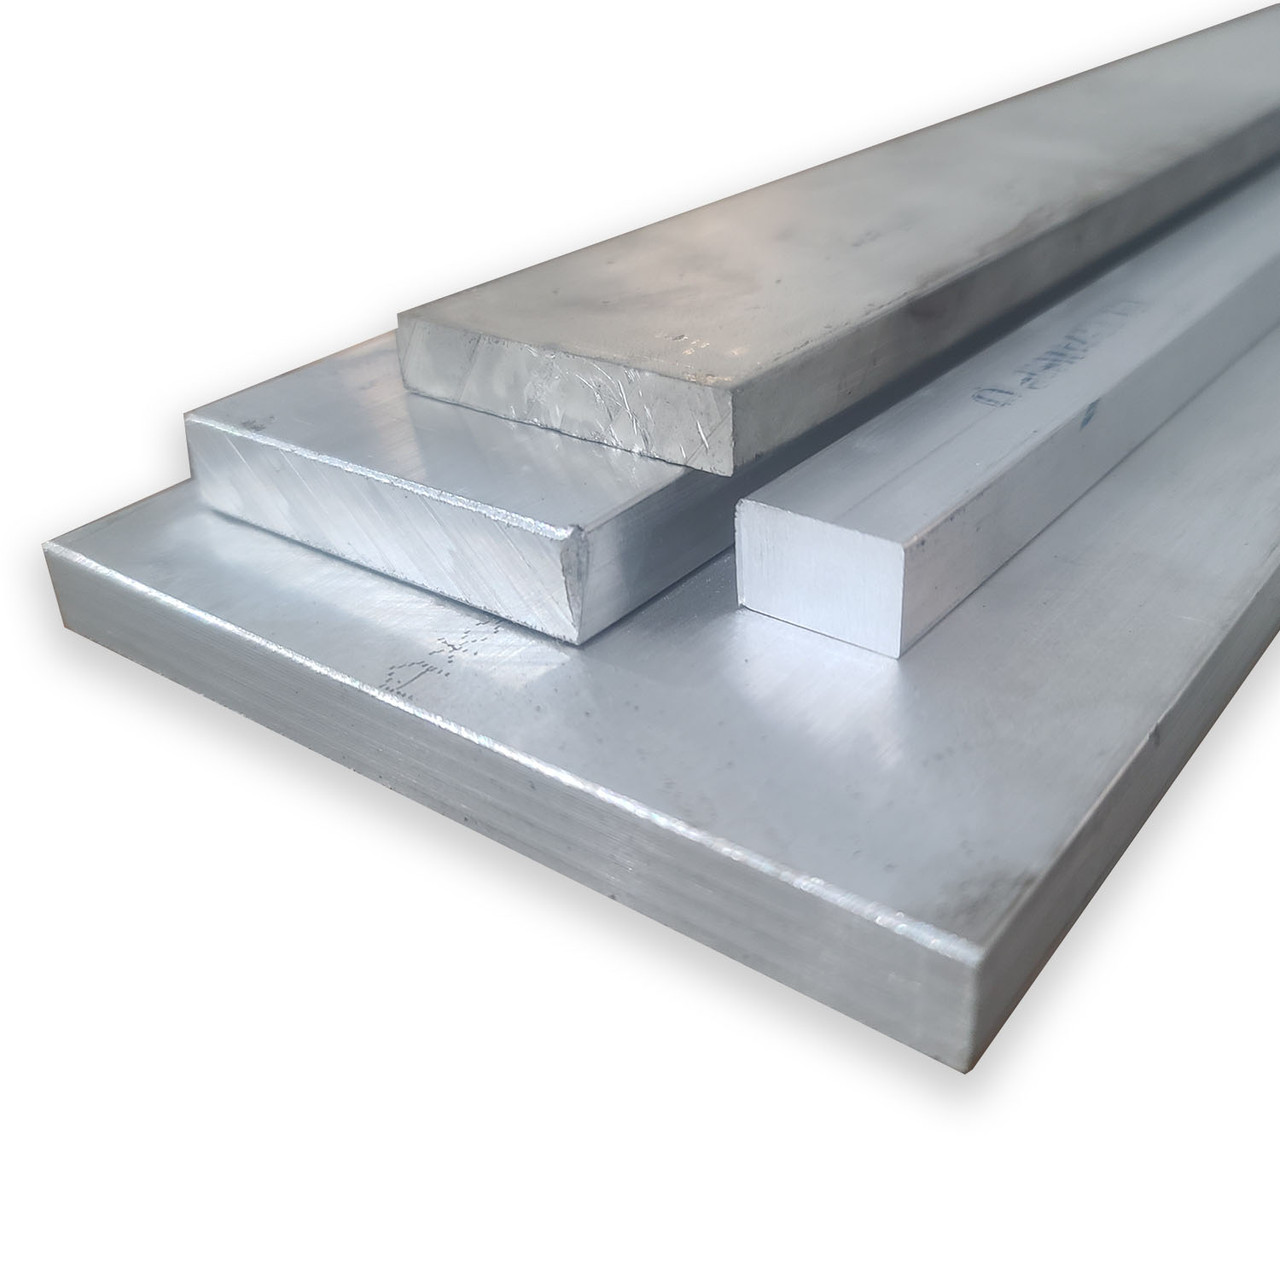 0.500" x 0.625" x 24" (3 Pack), 6061-T6511 Aluminum Flat Bar